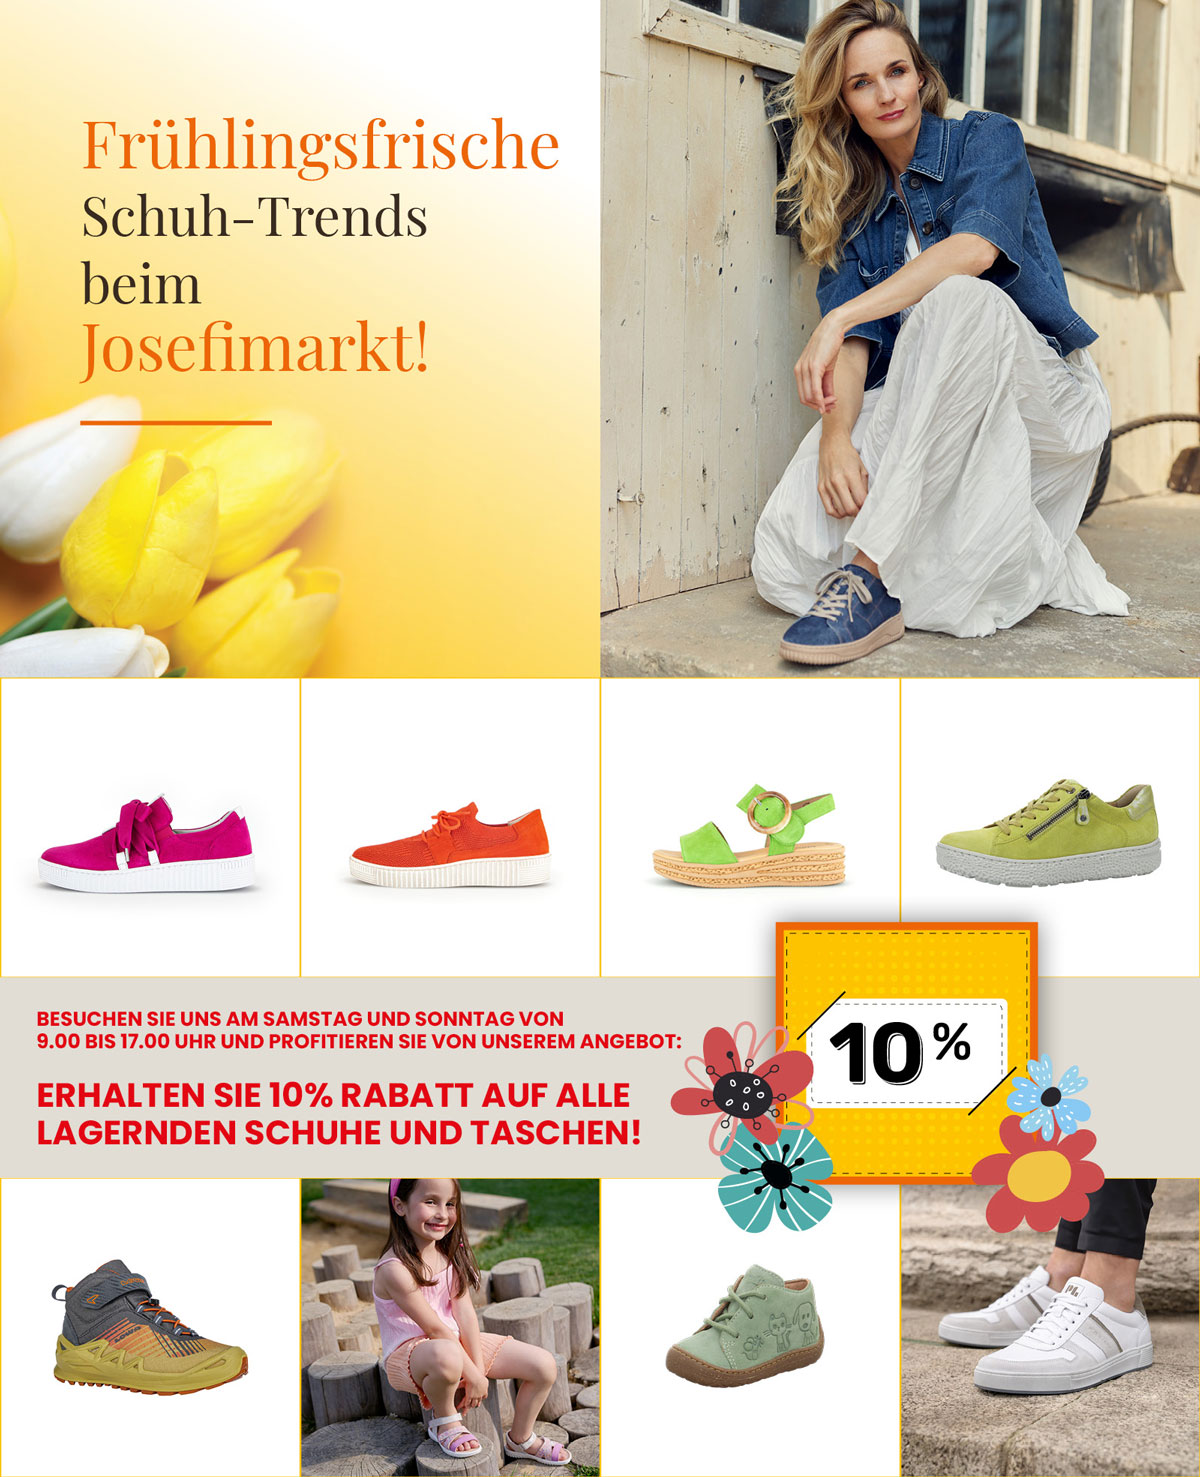 Frühlingsfrische Schuh-Trends  beim Josefimarkt!